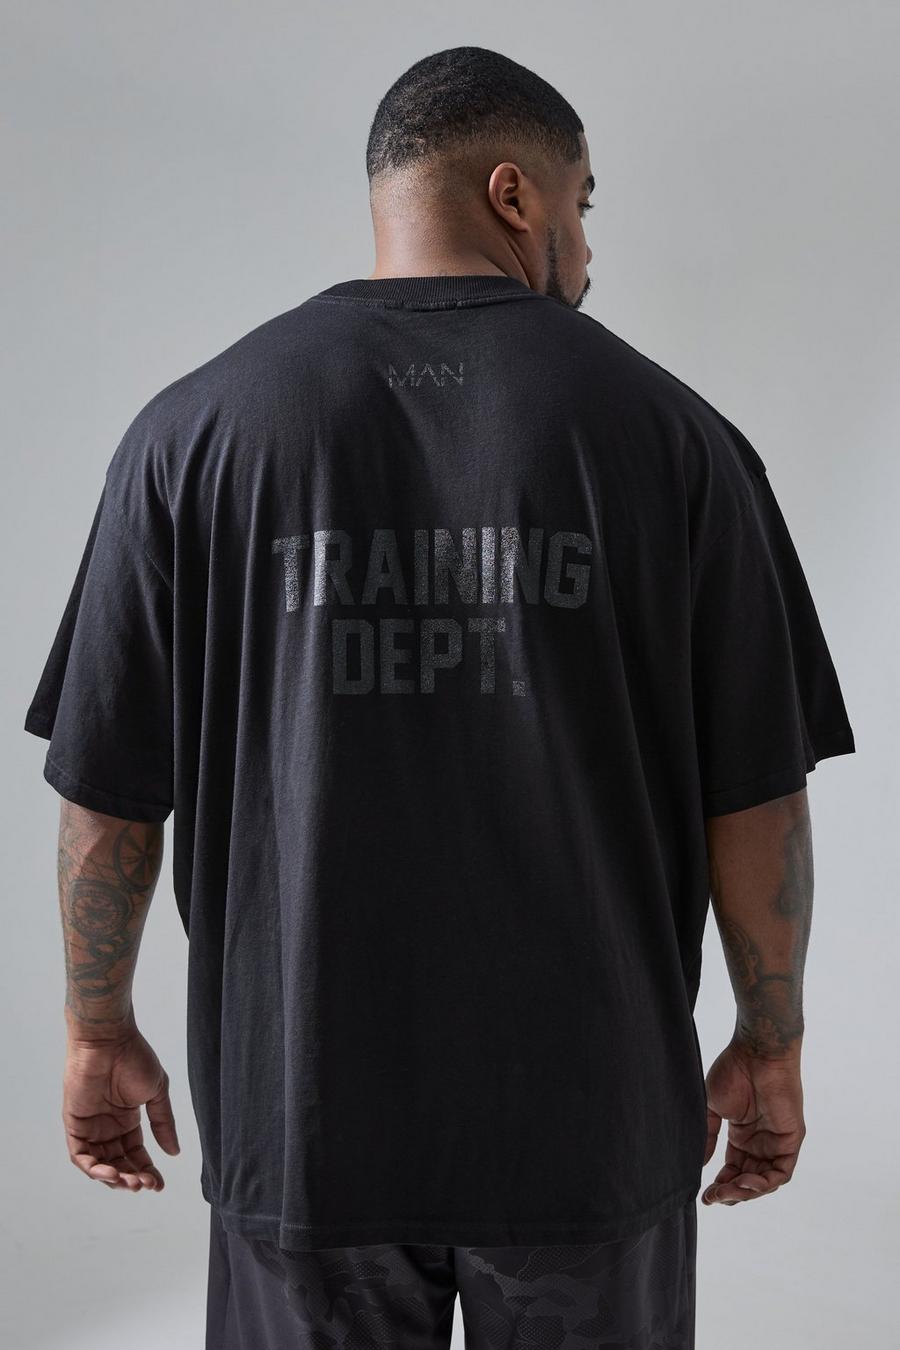 T-shirt Plus Size oversize Active Training Dept, Black